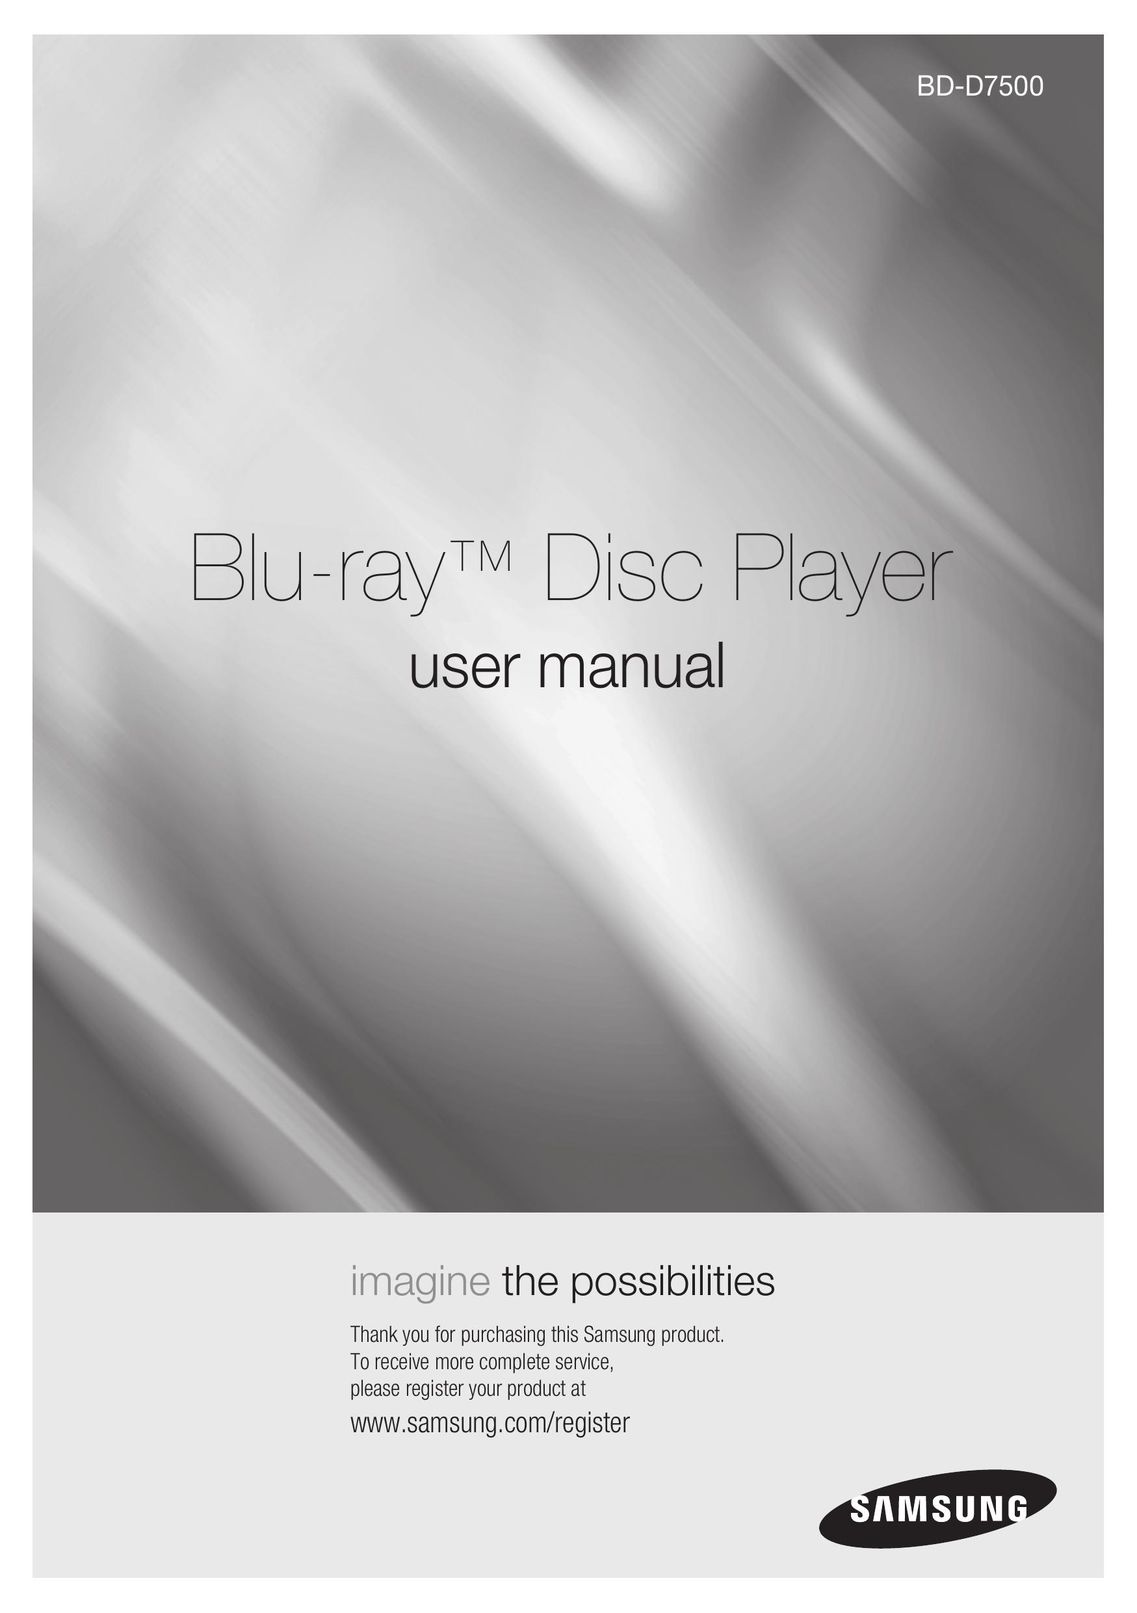 Samsung BD-D7500 DVD Player User Manual